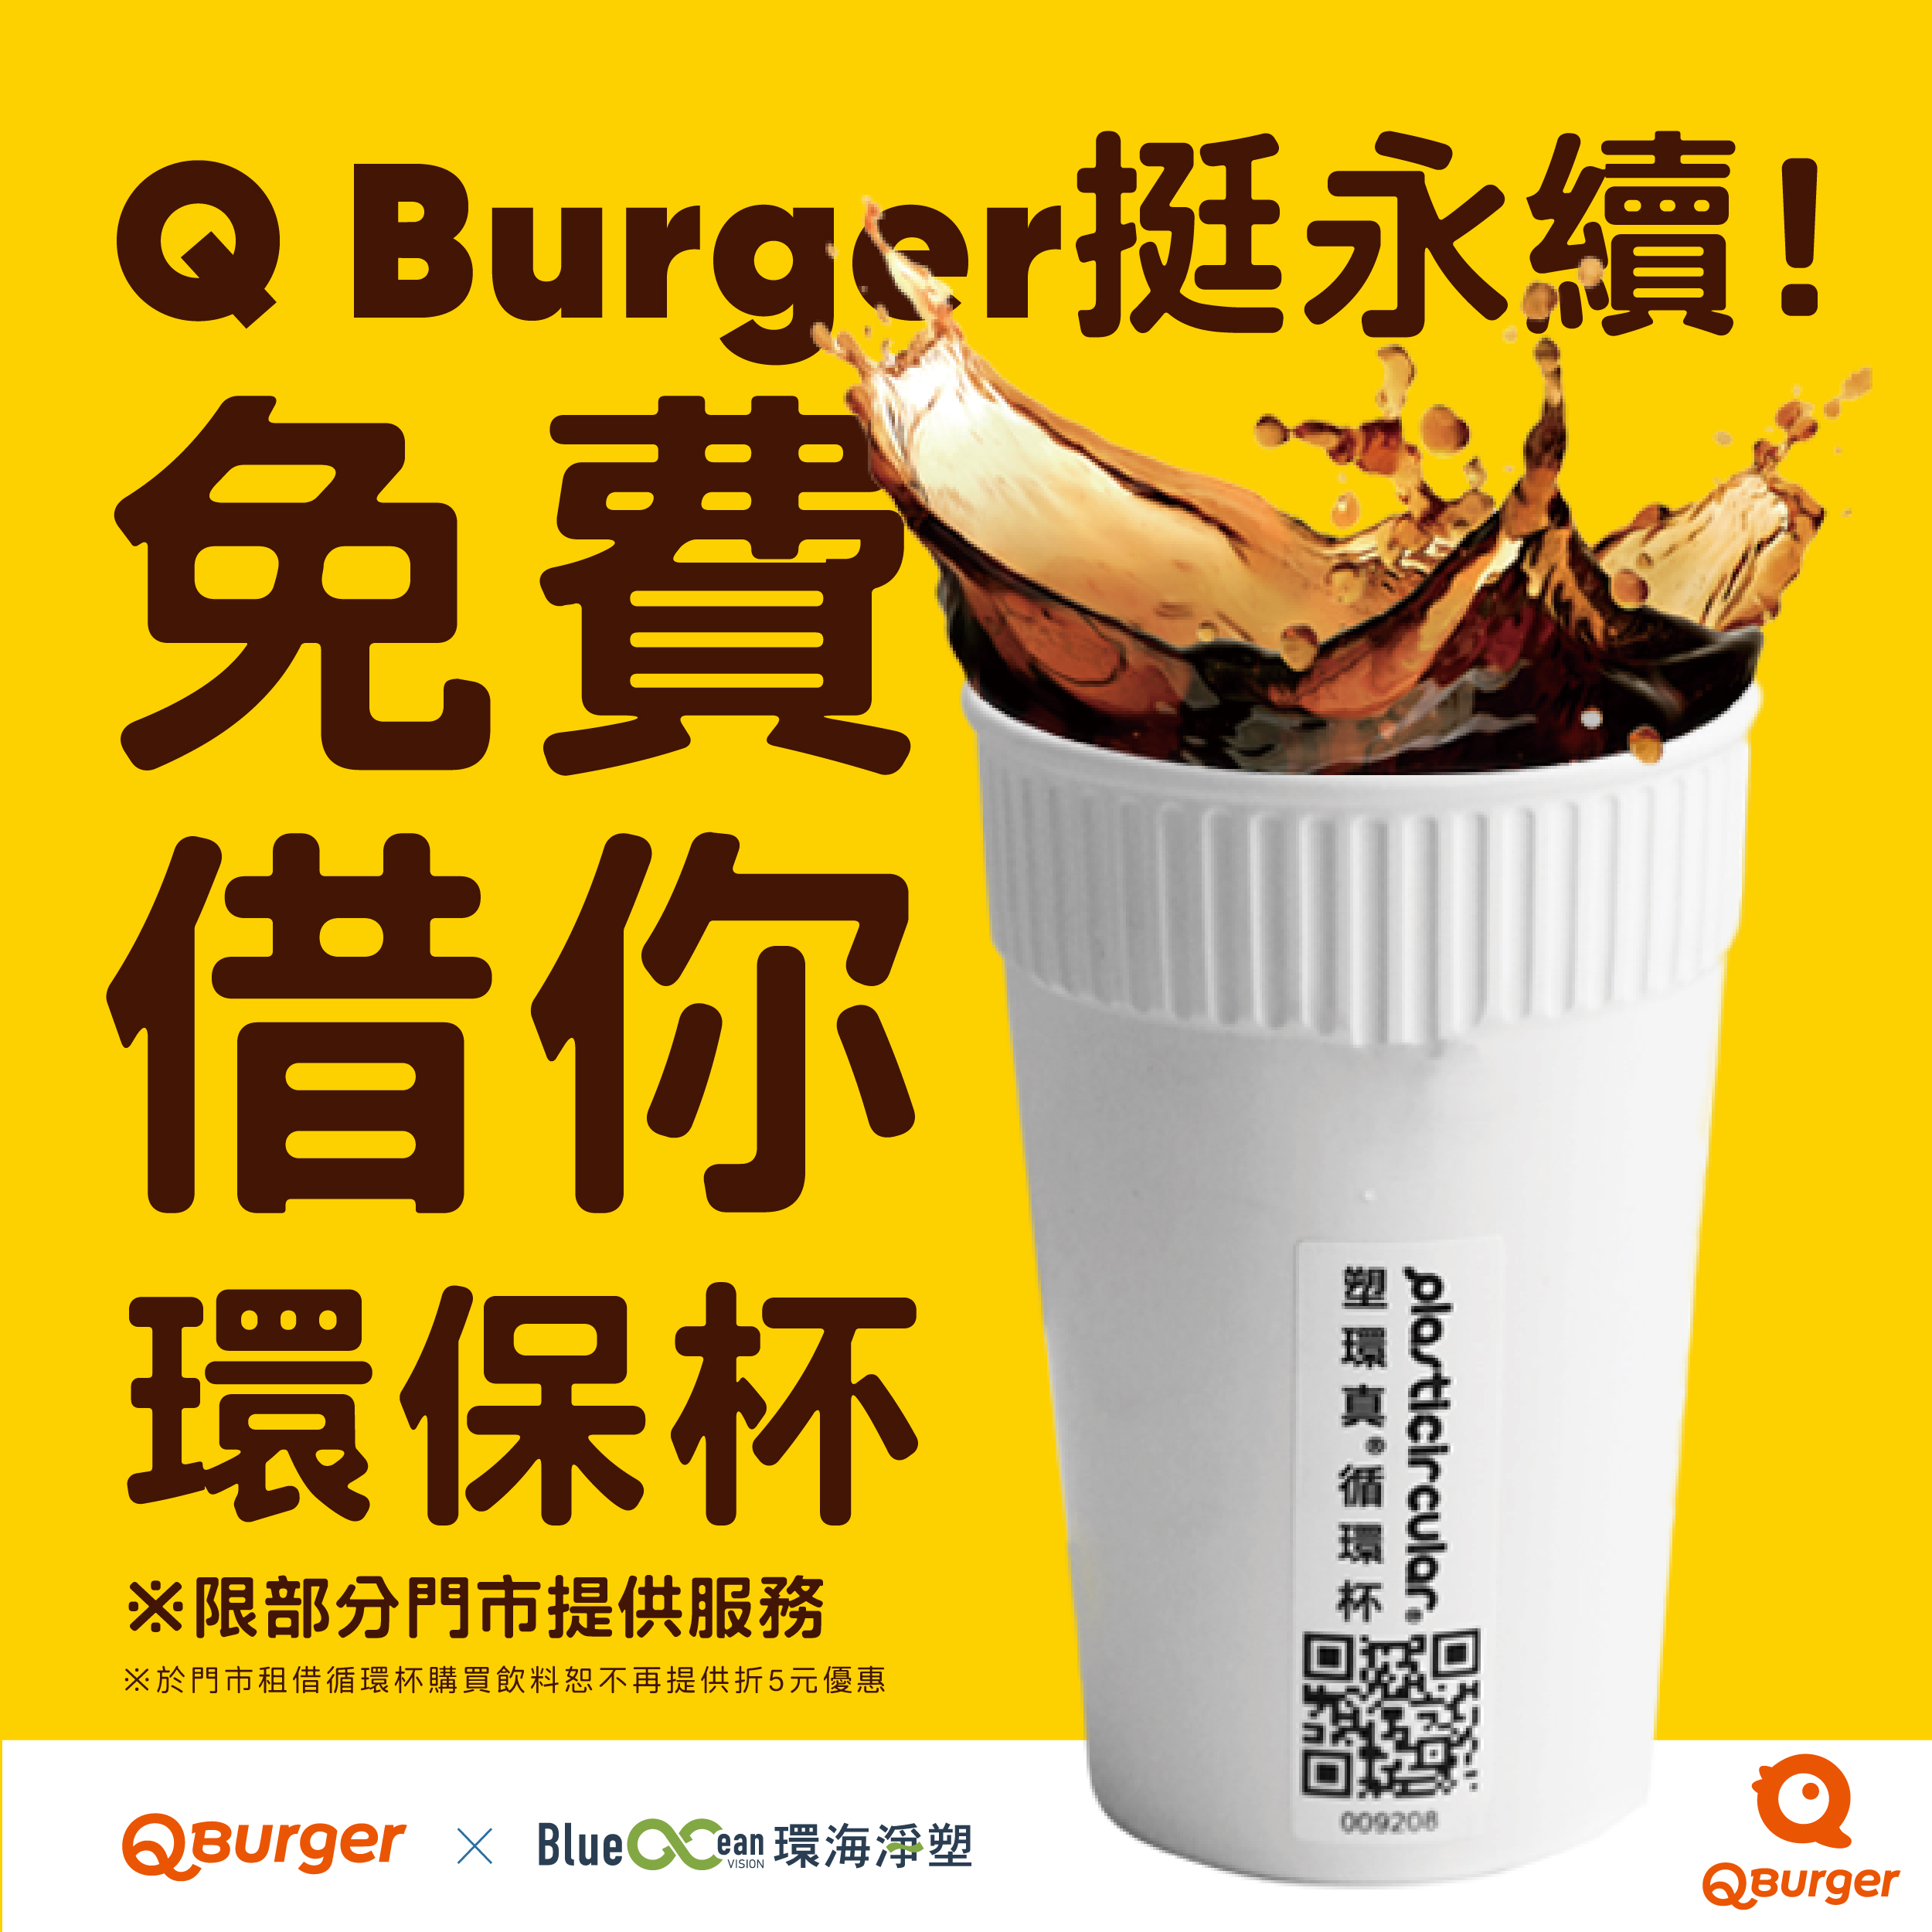 Q Burger 挺永續！